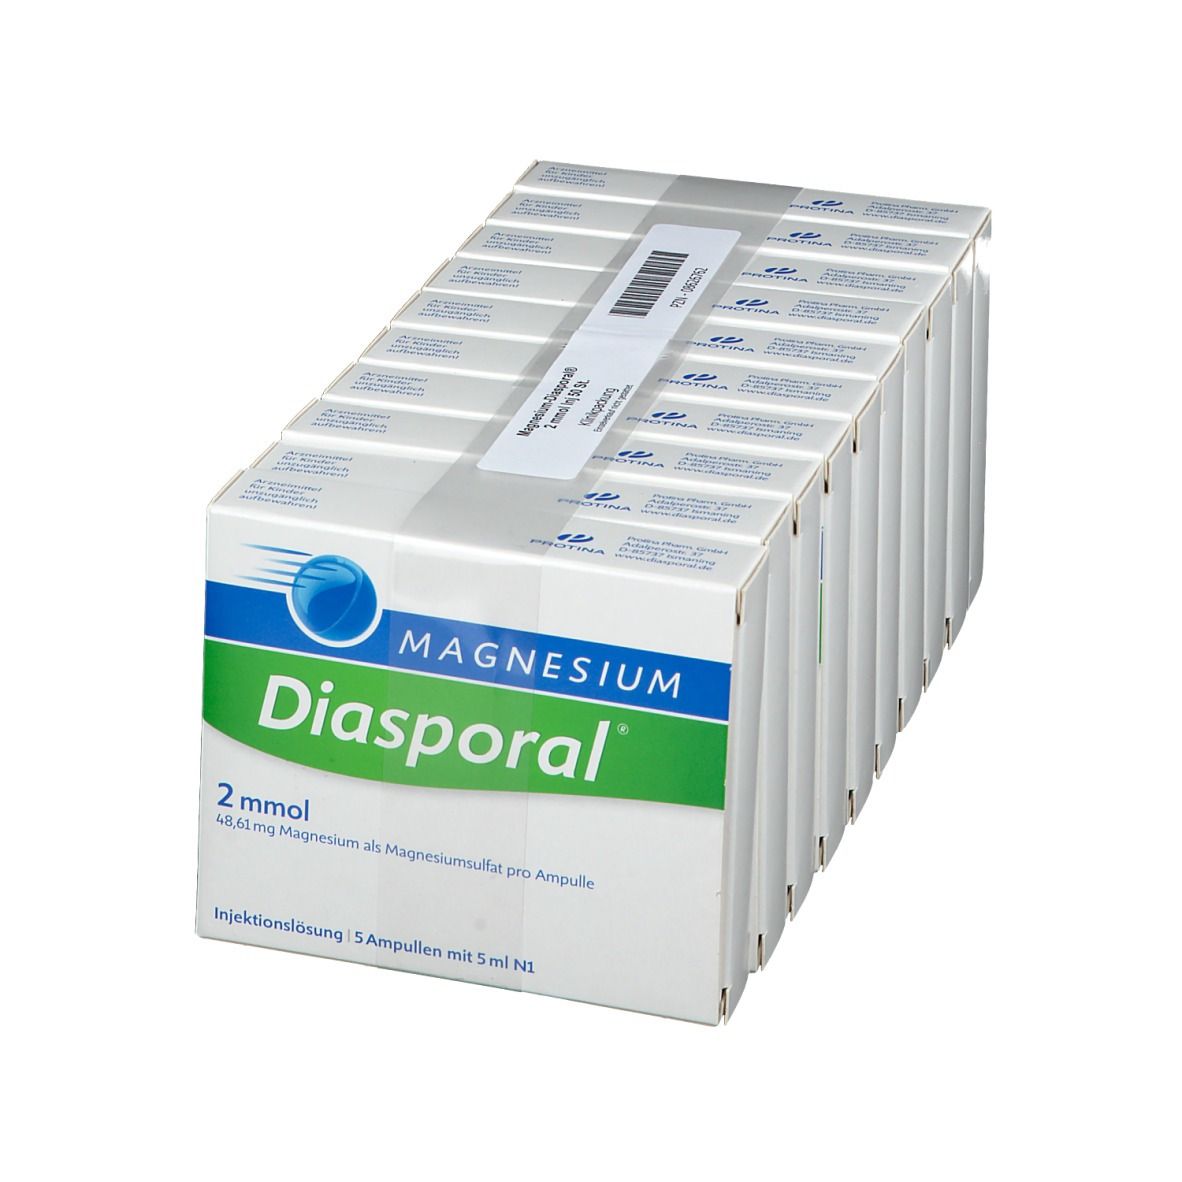 Magnesium-Diasporal® 2 mmol Injektionslösung